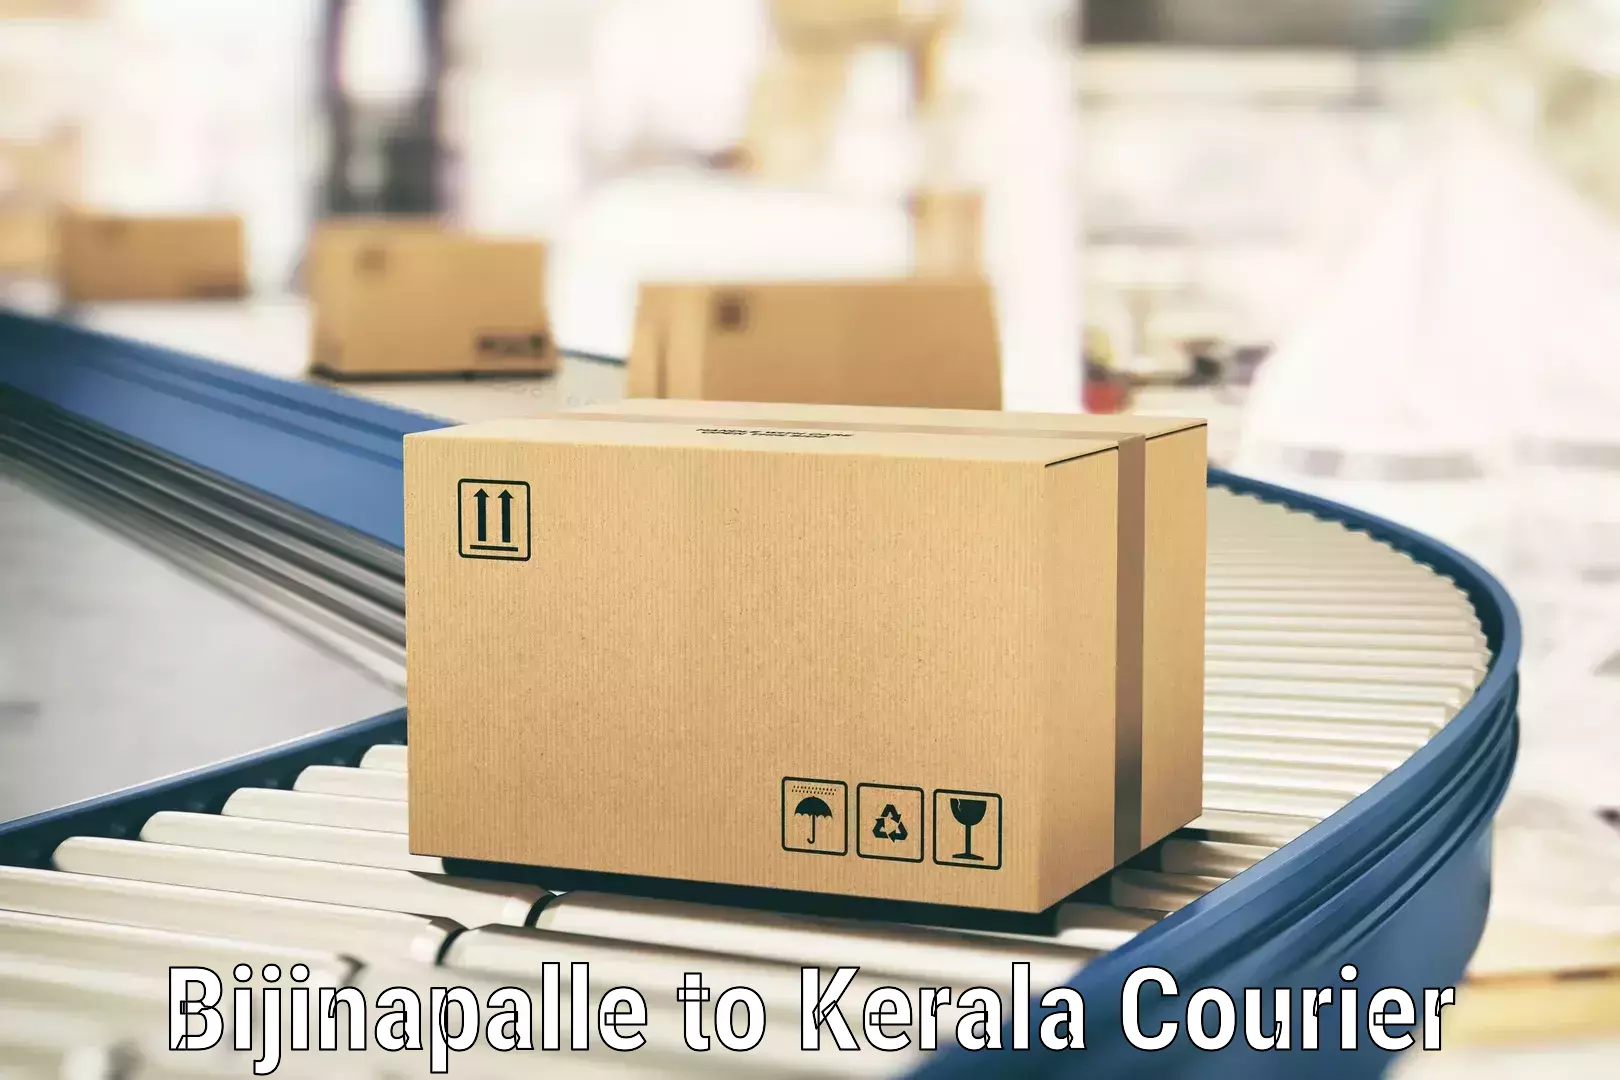 State-of-the-art courier technology Bijinapalle to Kalluvathukkal